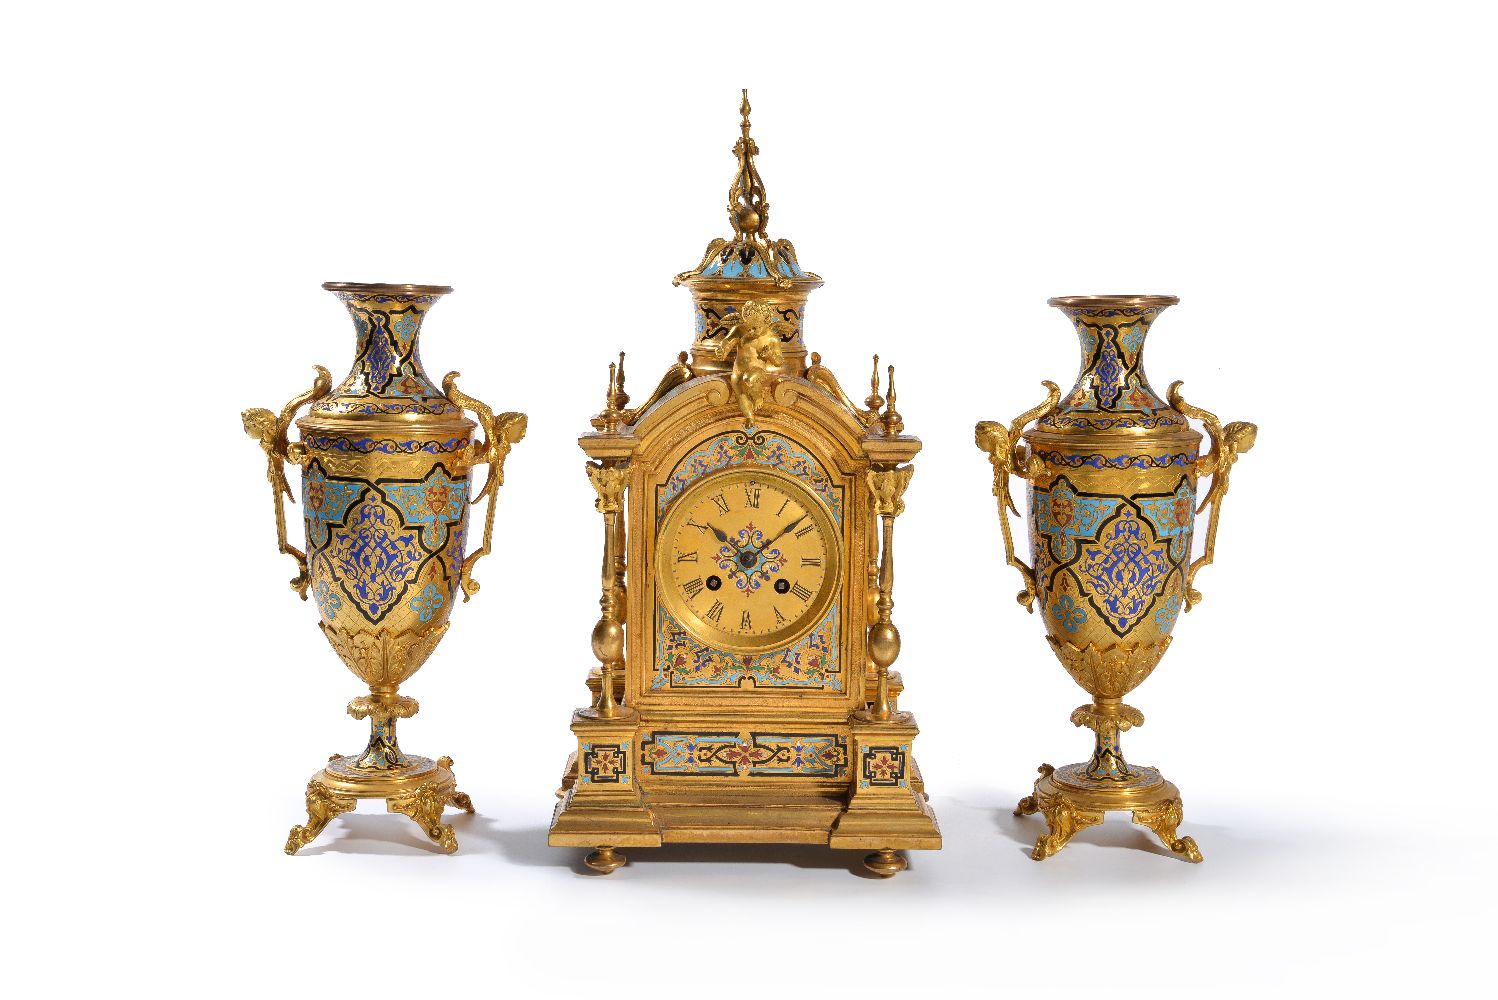 ‡ A French gilt bronze and champlevé enamel clock garniture in Renaissance Revival taste